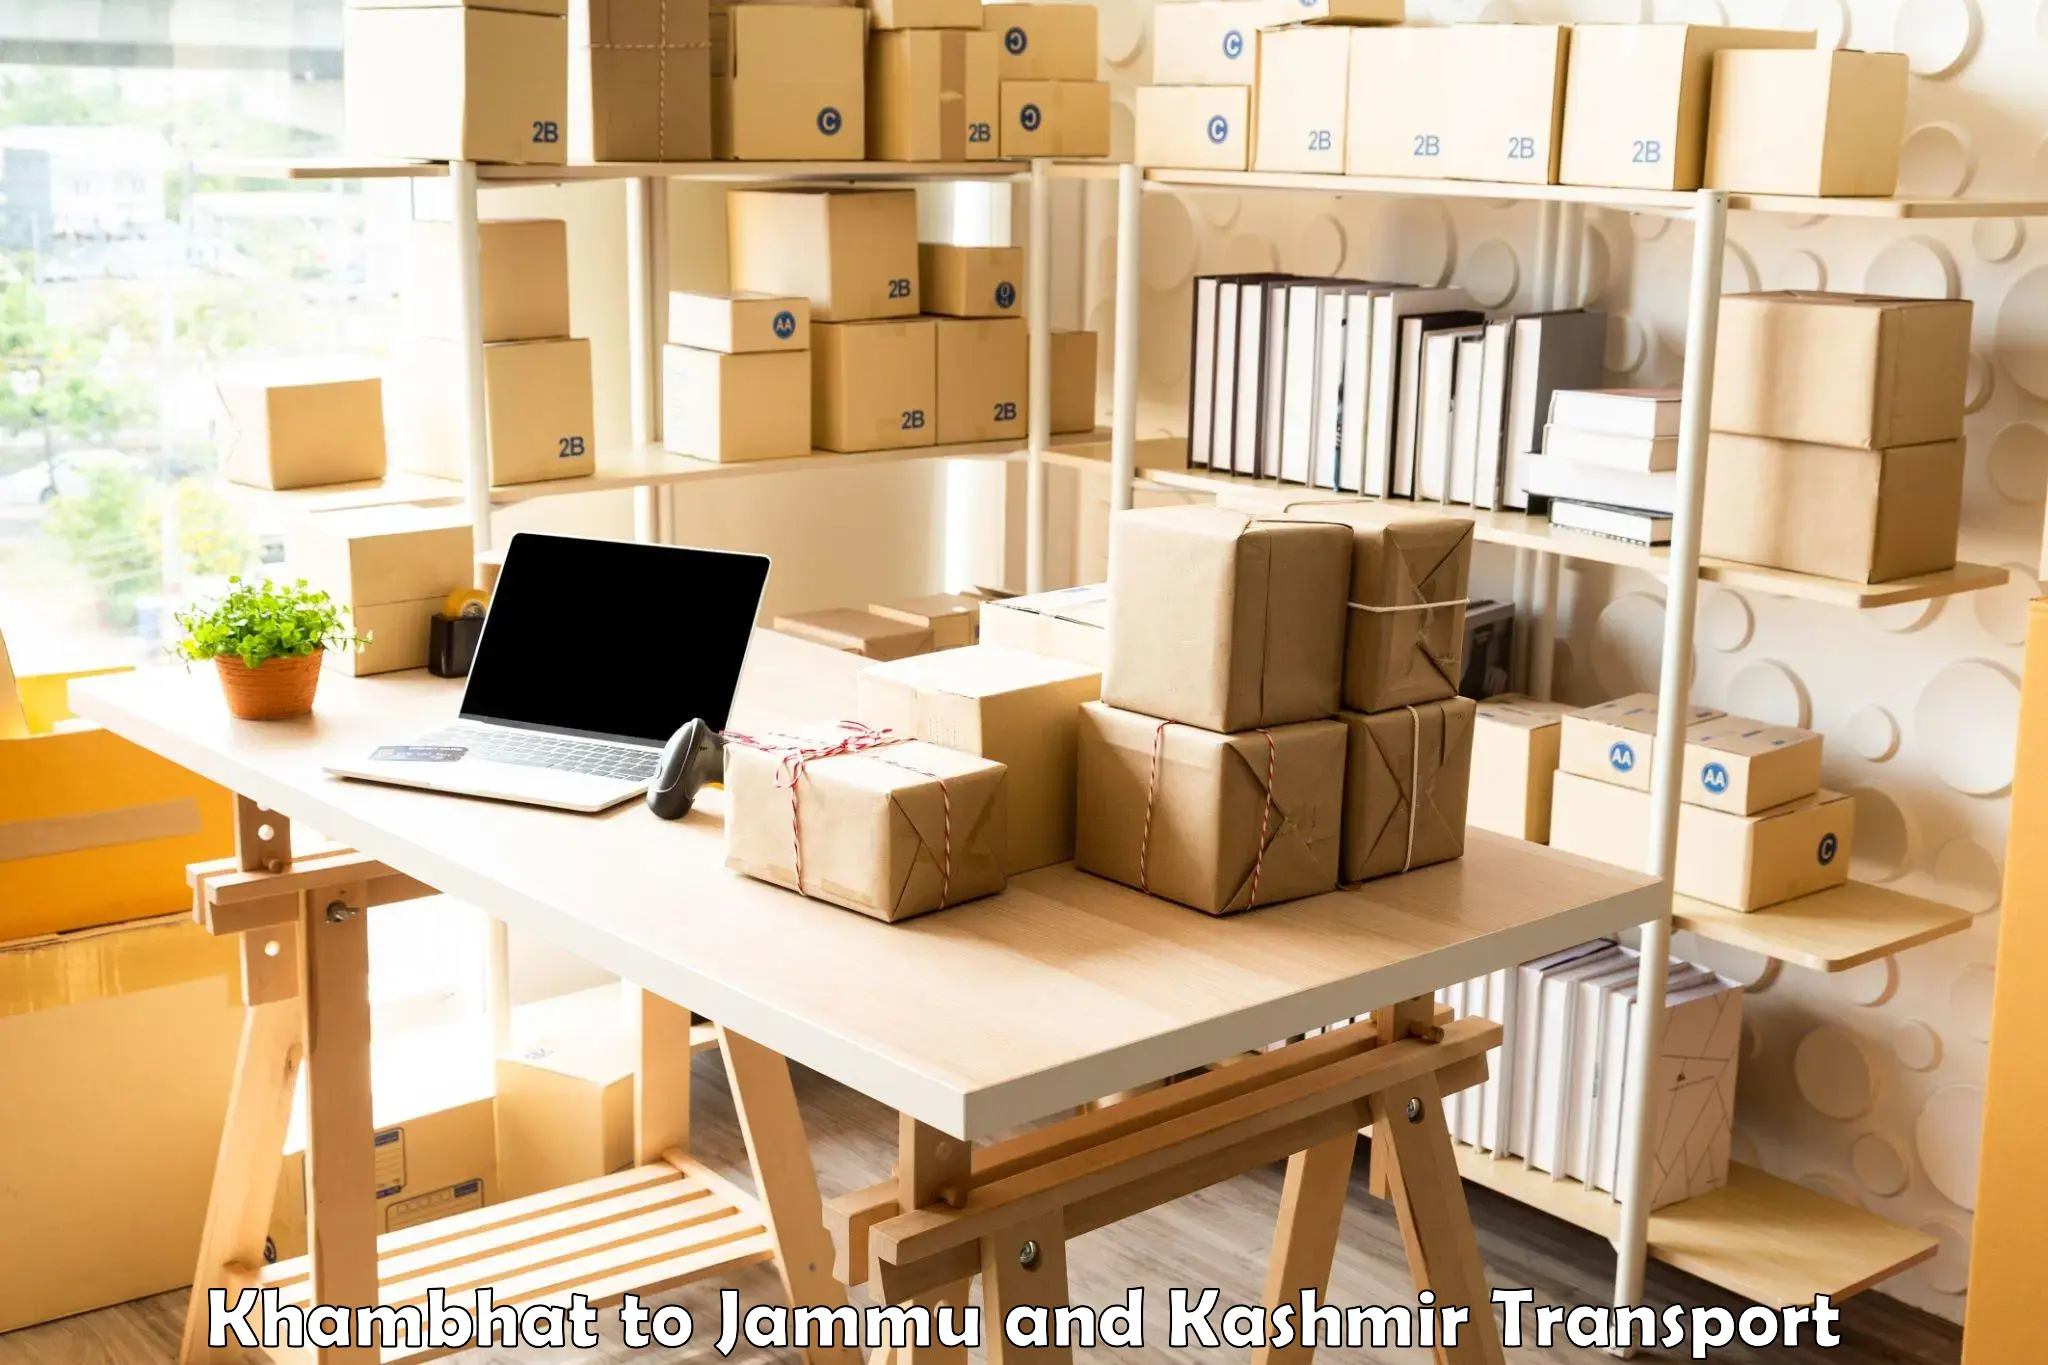 Truck transport companies in India Khambhat to Jammu and Kashmir